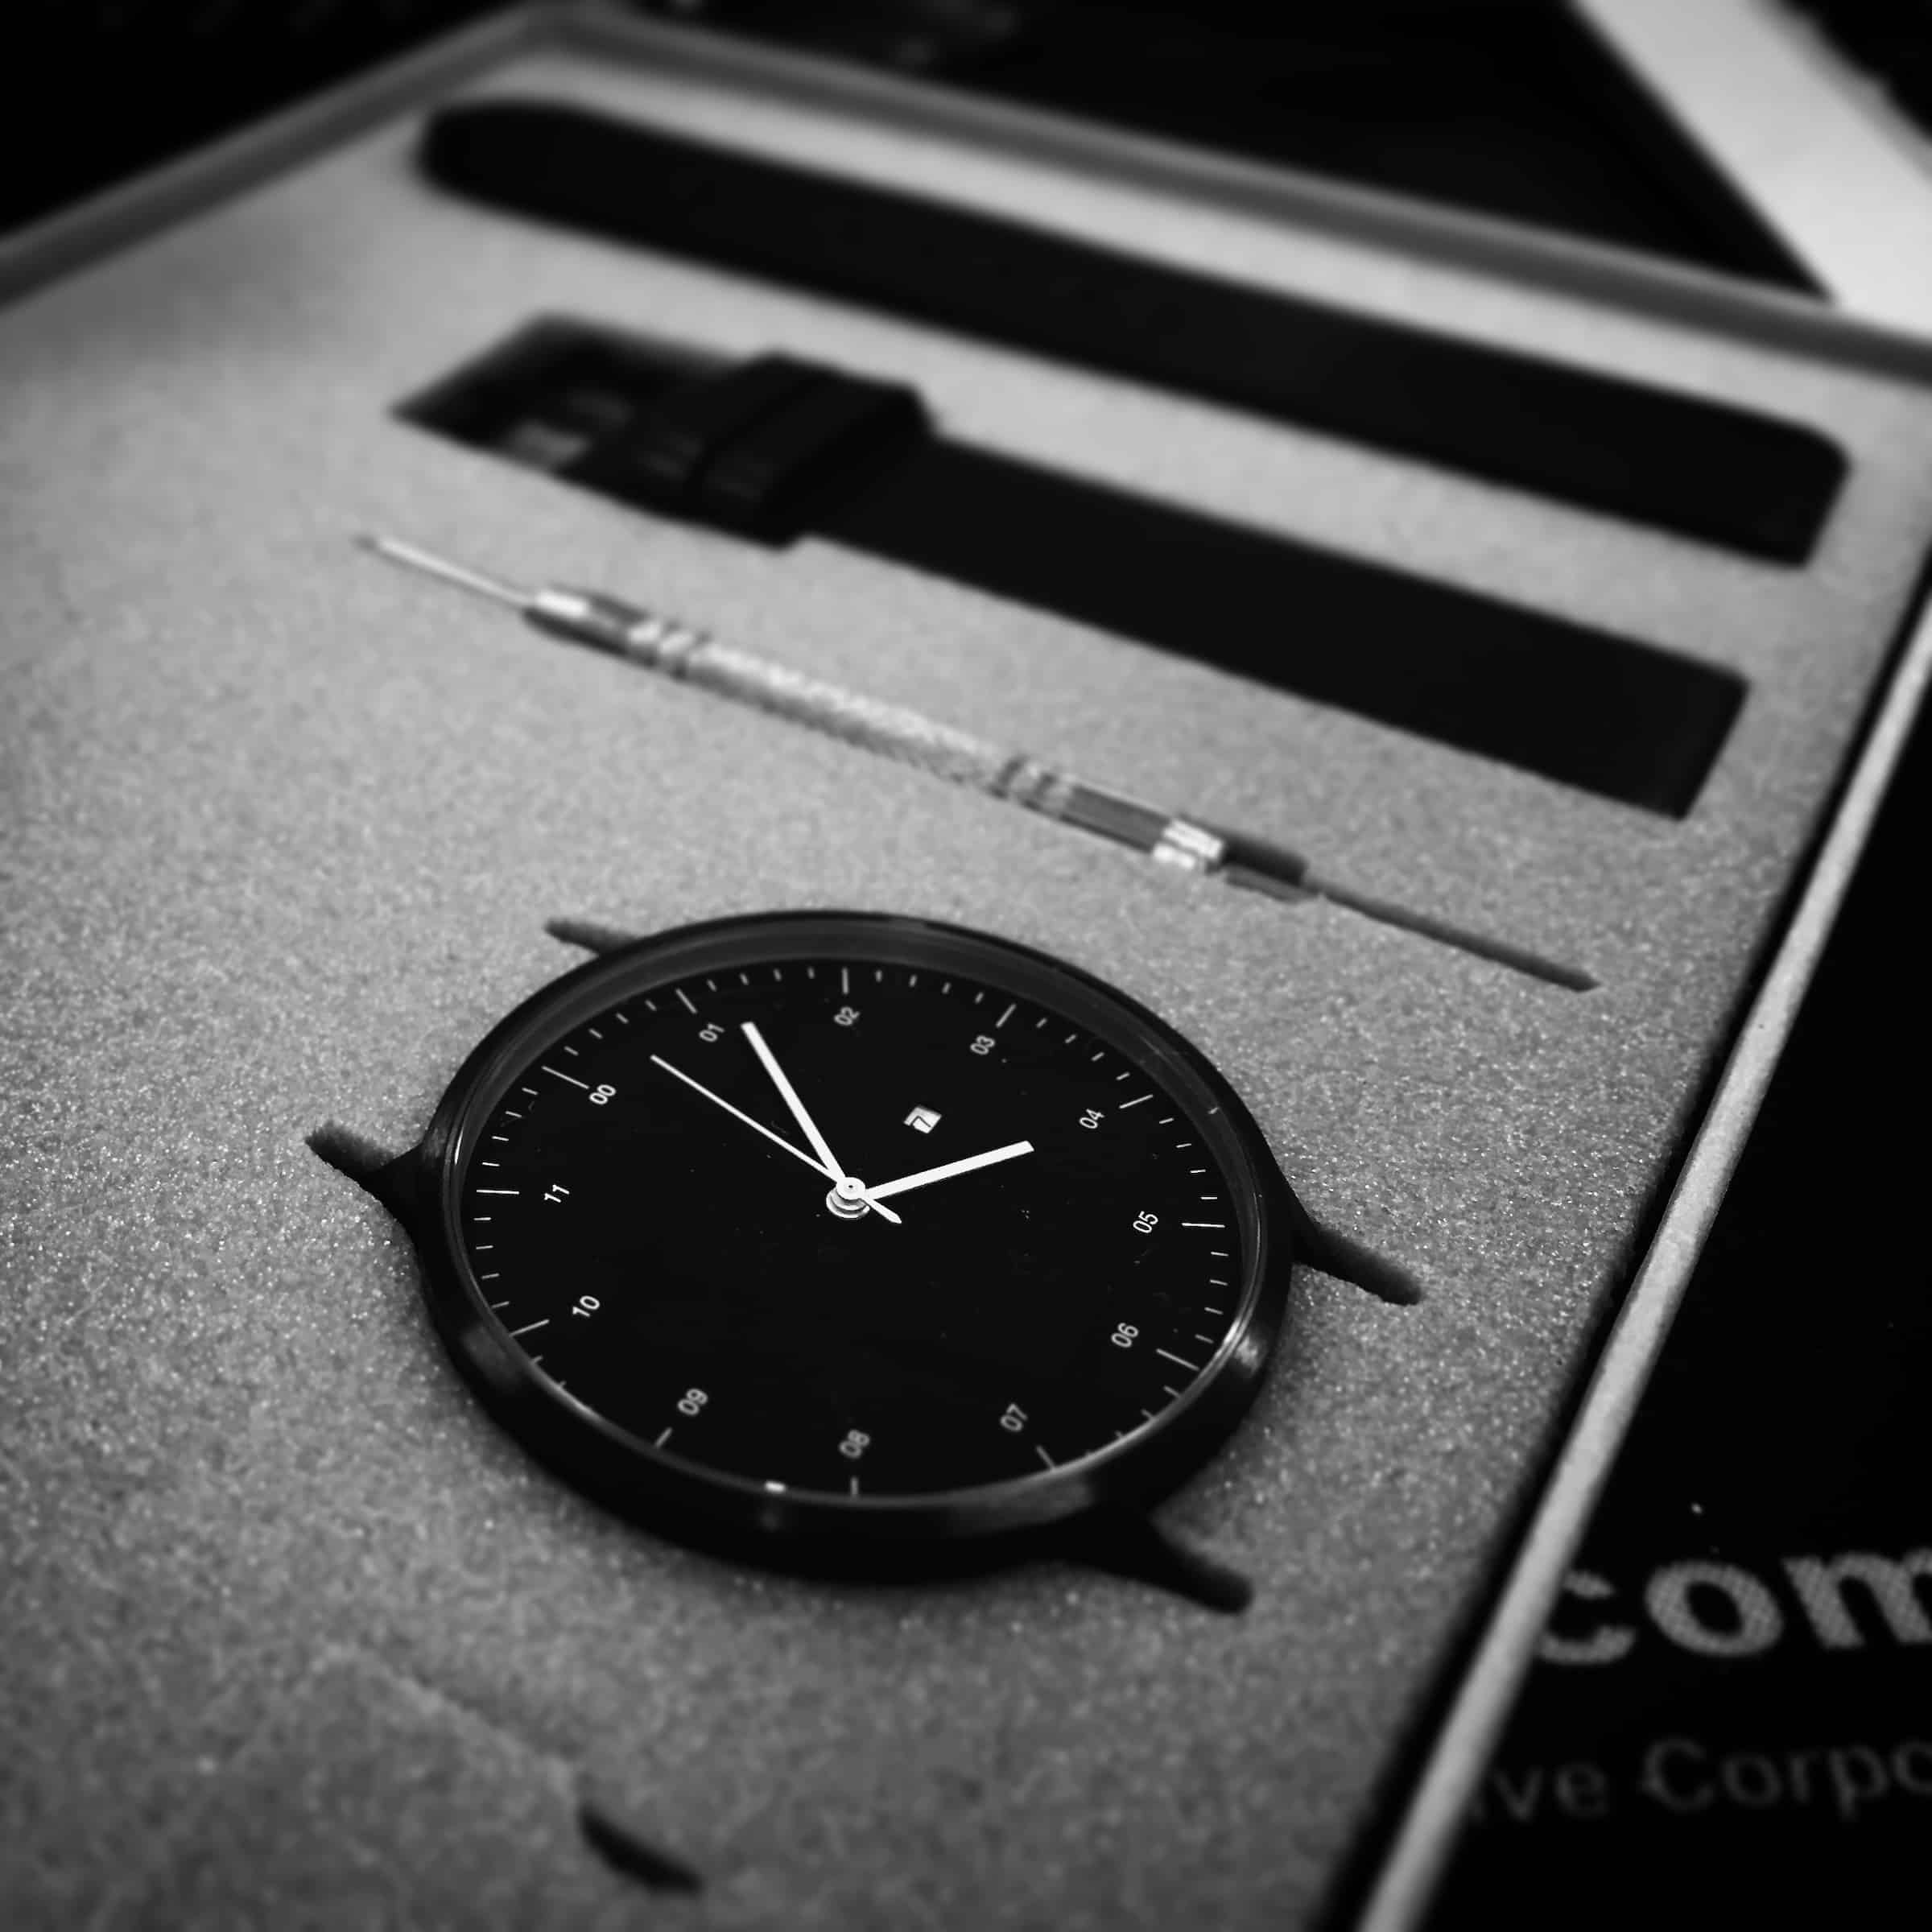 Black analog watch in a black box